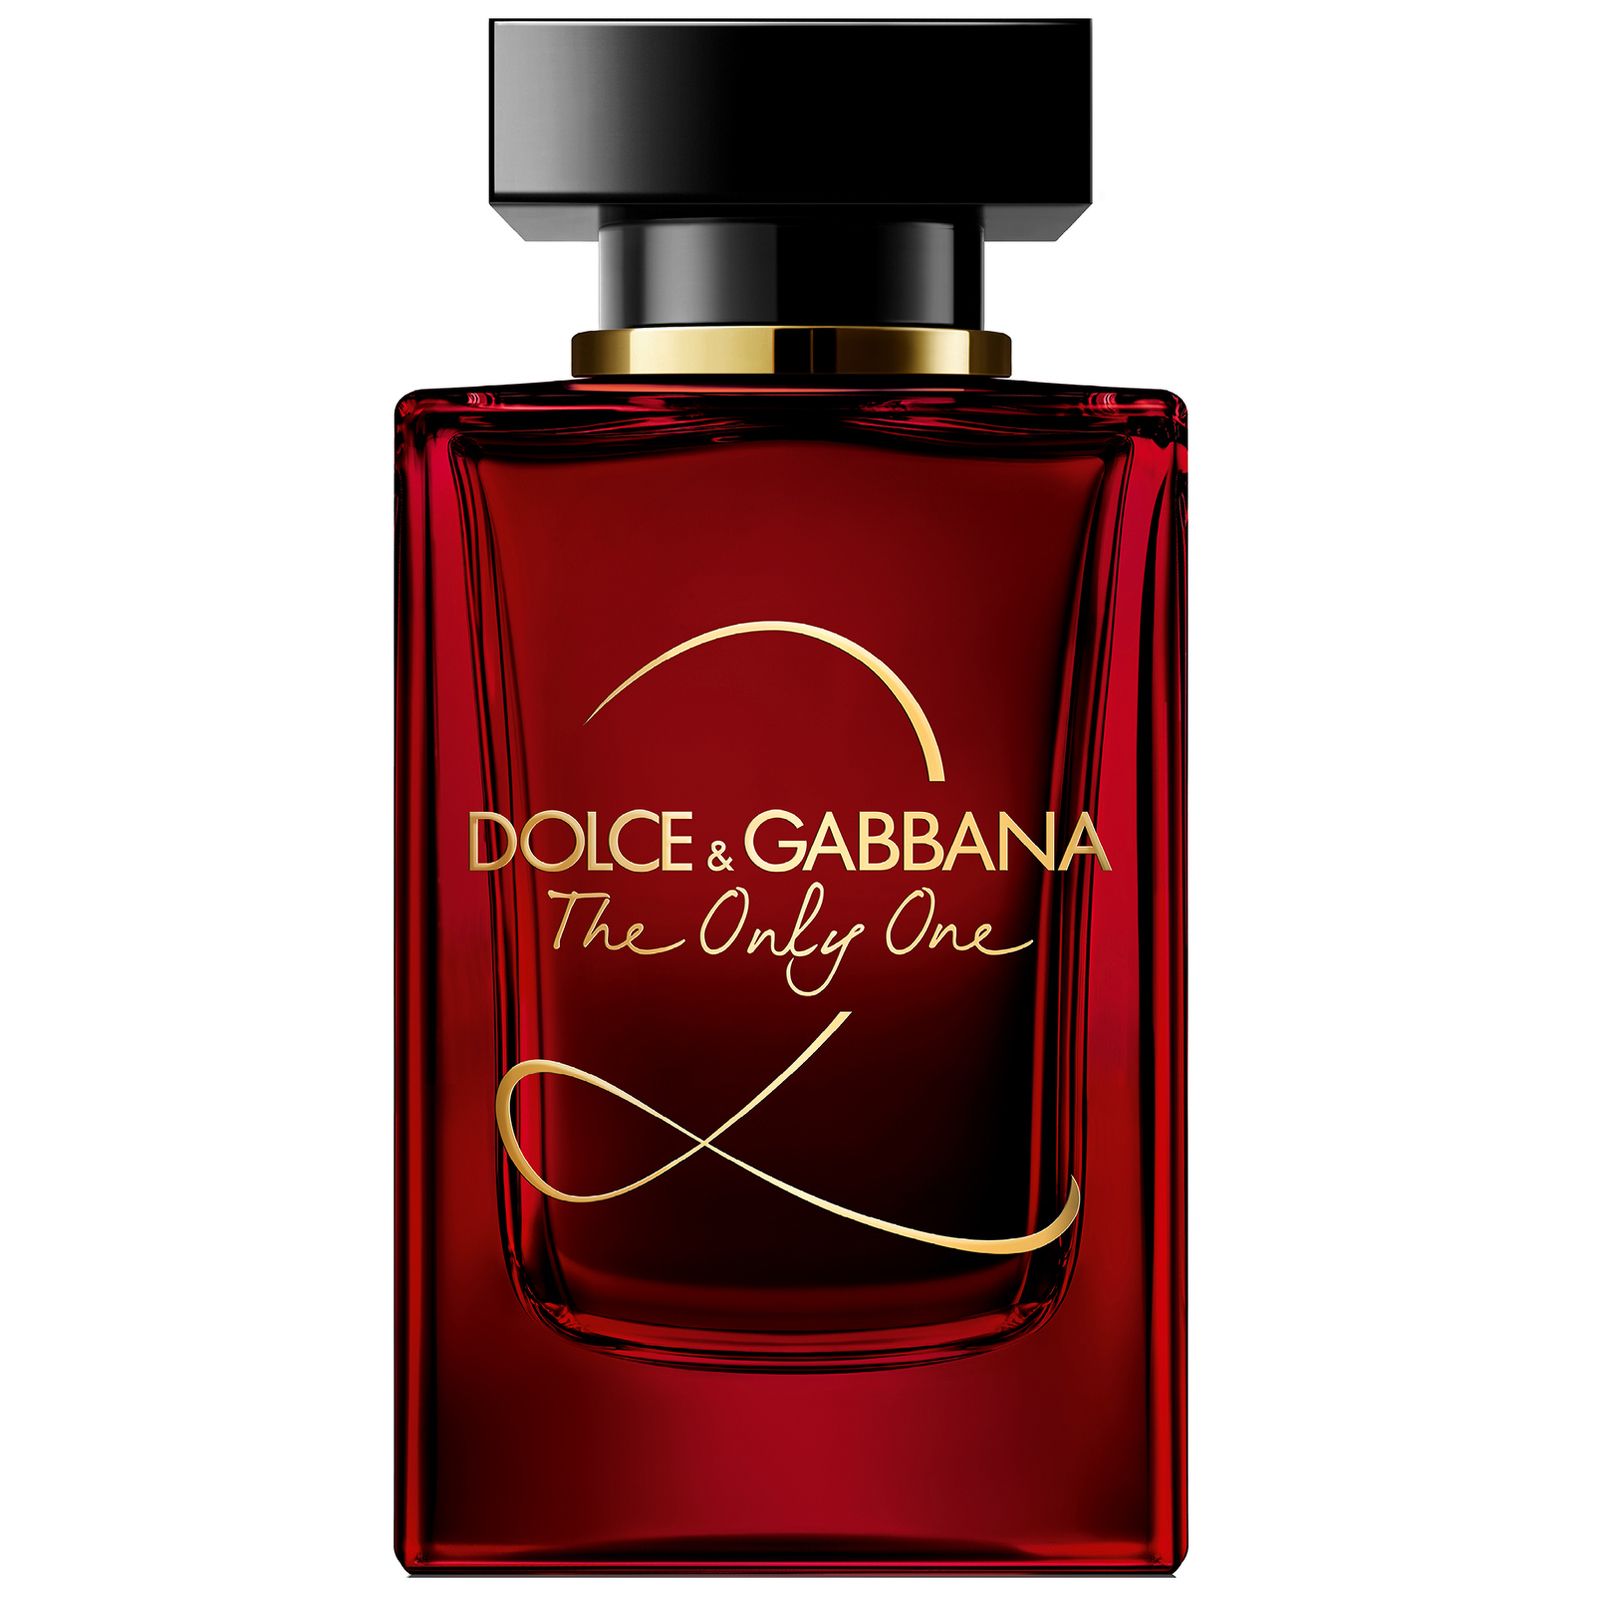 Dolce gabbana d. Dolce Gabbana the only one 2 100 мл. Dolce& Gabbana the only one 2 EDP, 100 ml. Dolce Gabbana the only one 2 30 мл. Dolce & Gabbana the only one, EDP., 100 ml.